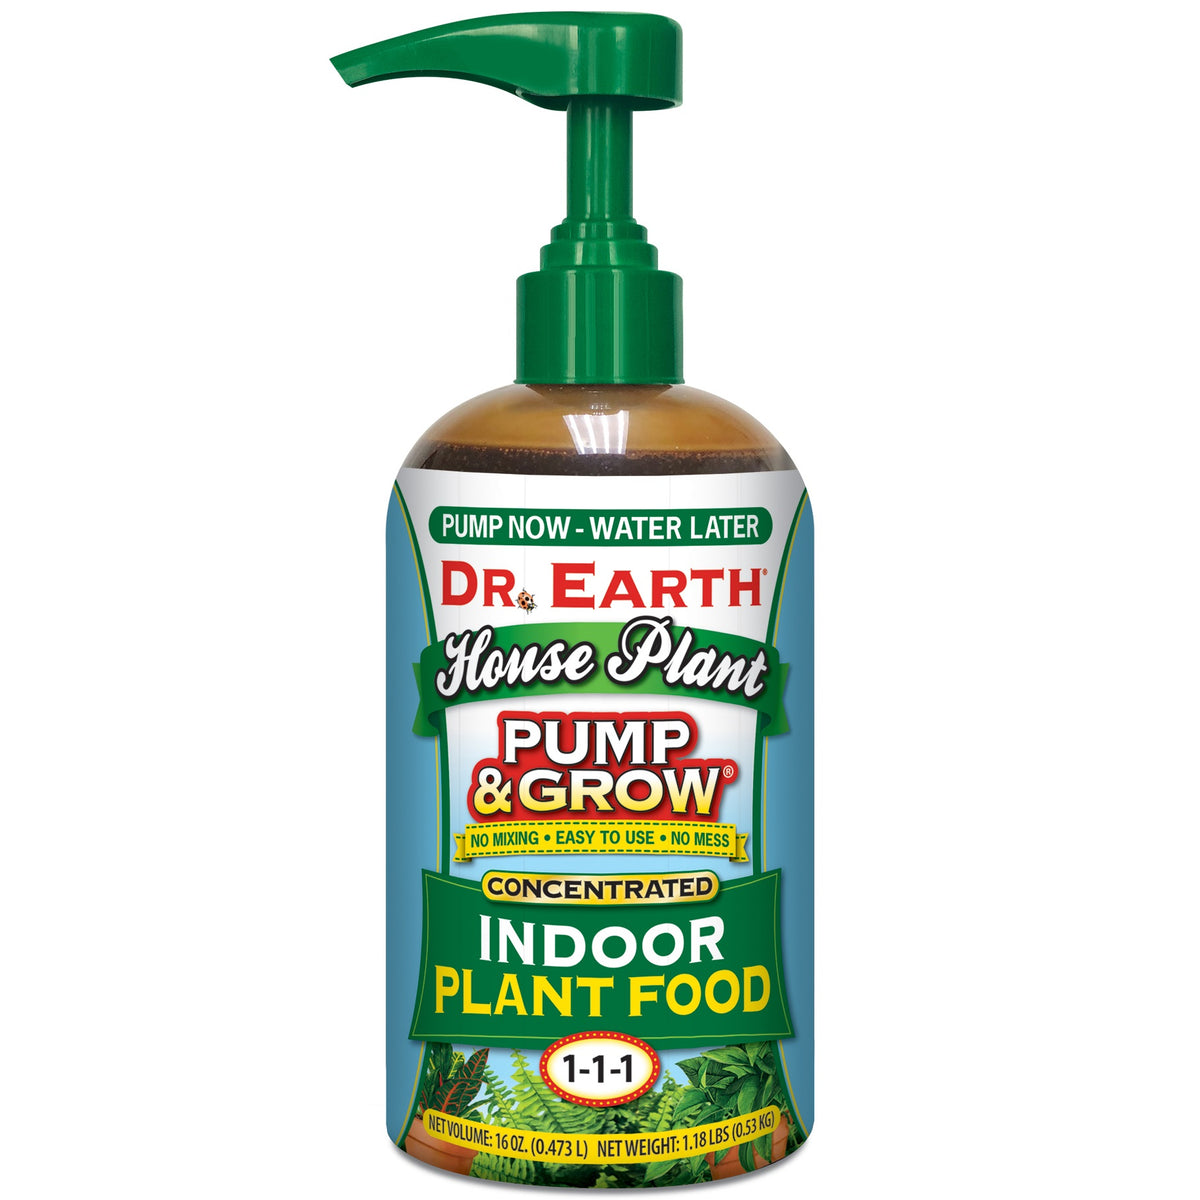 Dr. Earth 1072 Pump & Grow Liquid Concentrate Organic Plant Food, 8 Oz